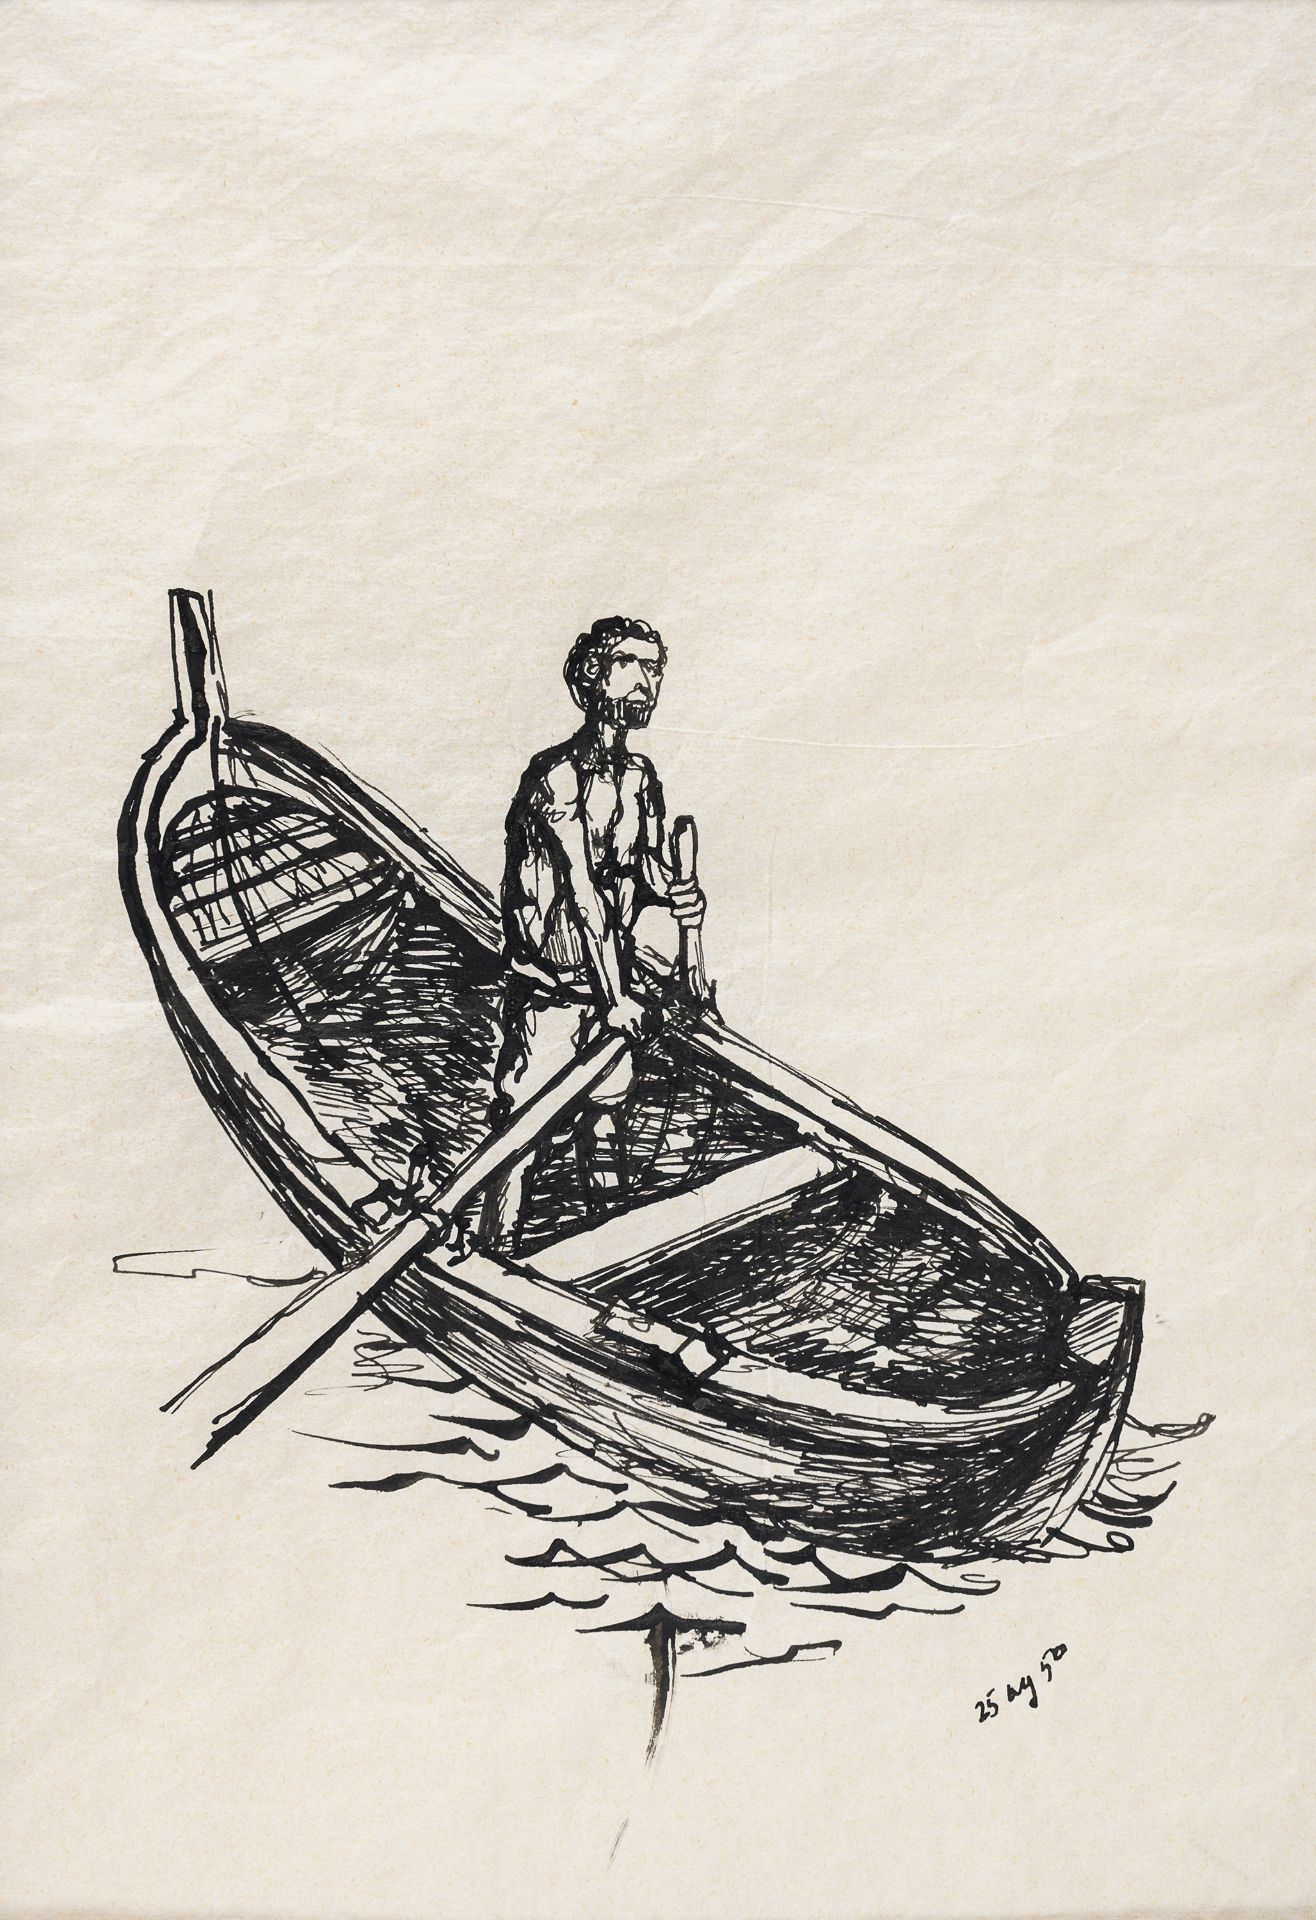 INK DRAWING FISHERMAN BY RENATO GUTTUSO